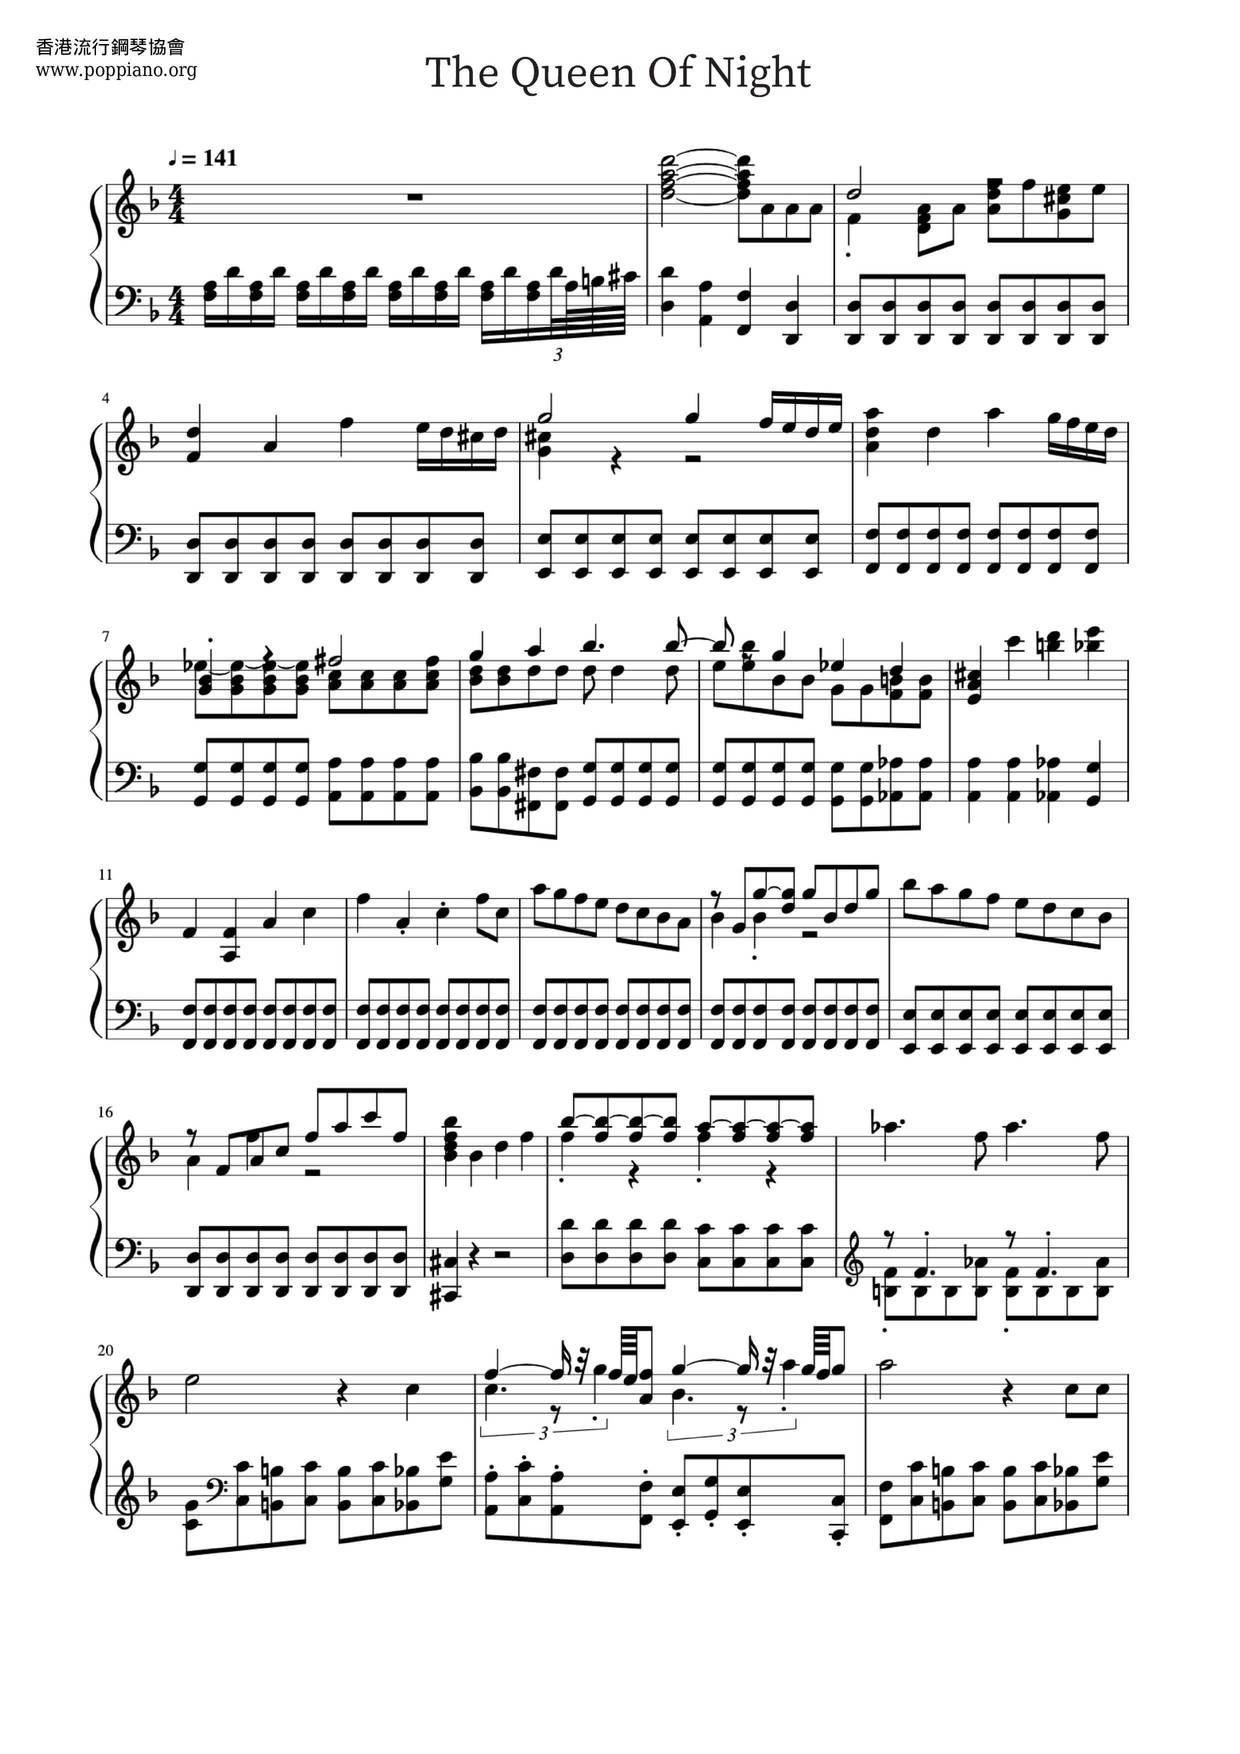 The Magic Flute - Queen of the Nightピアノ譜